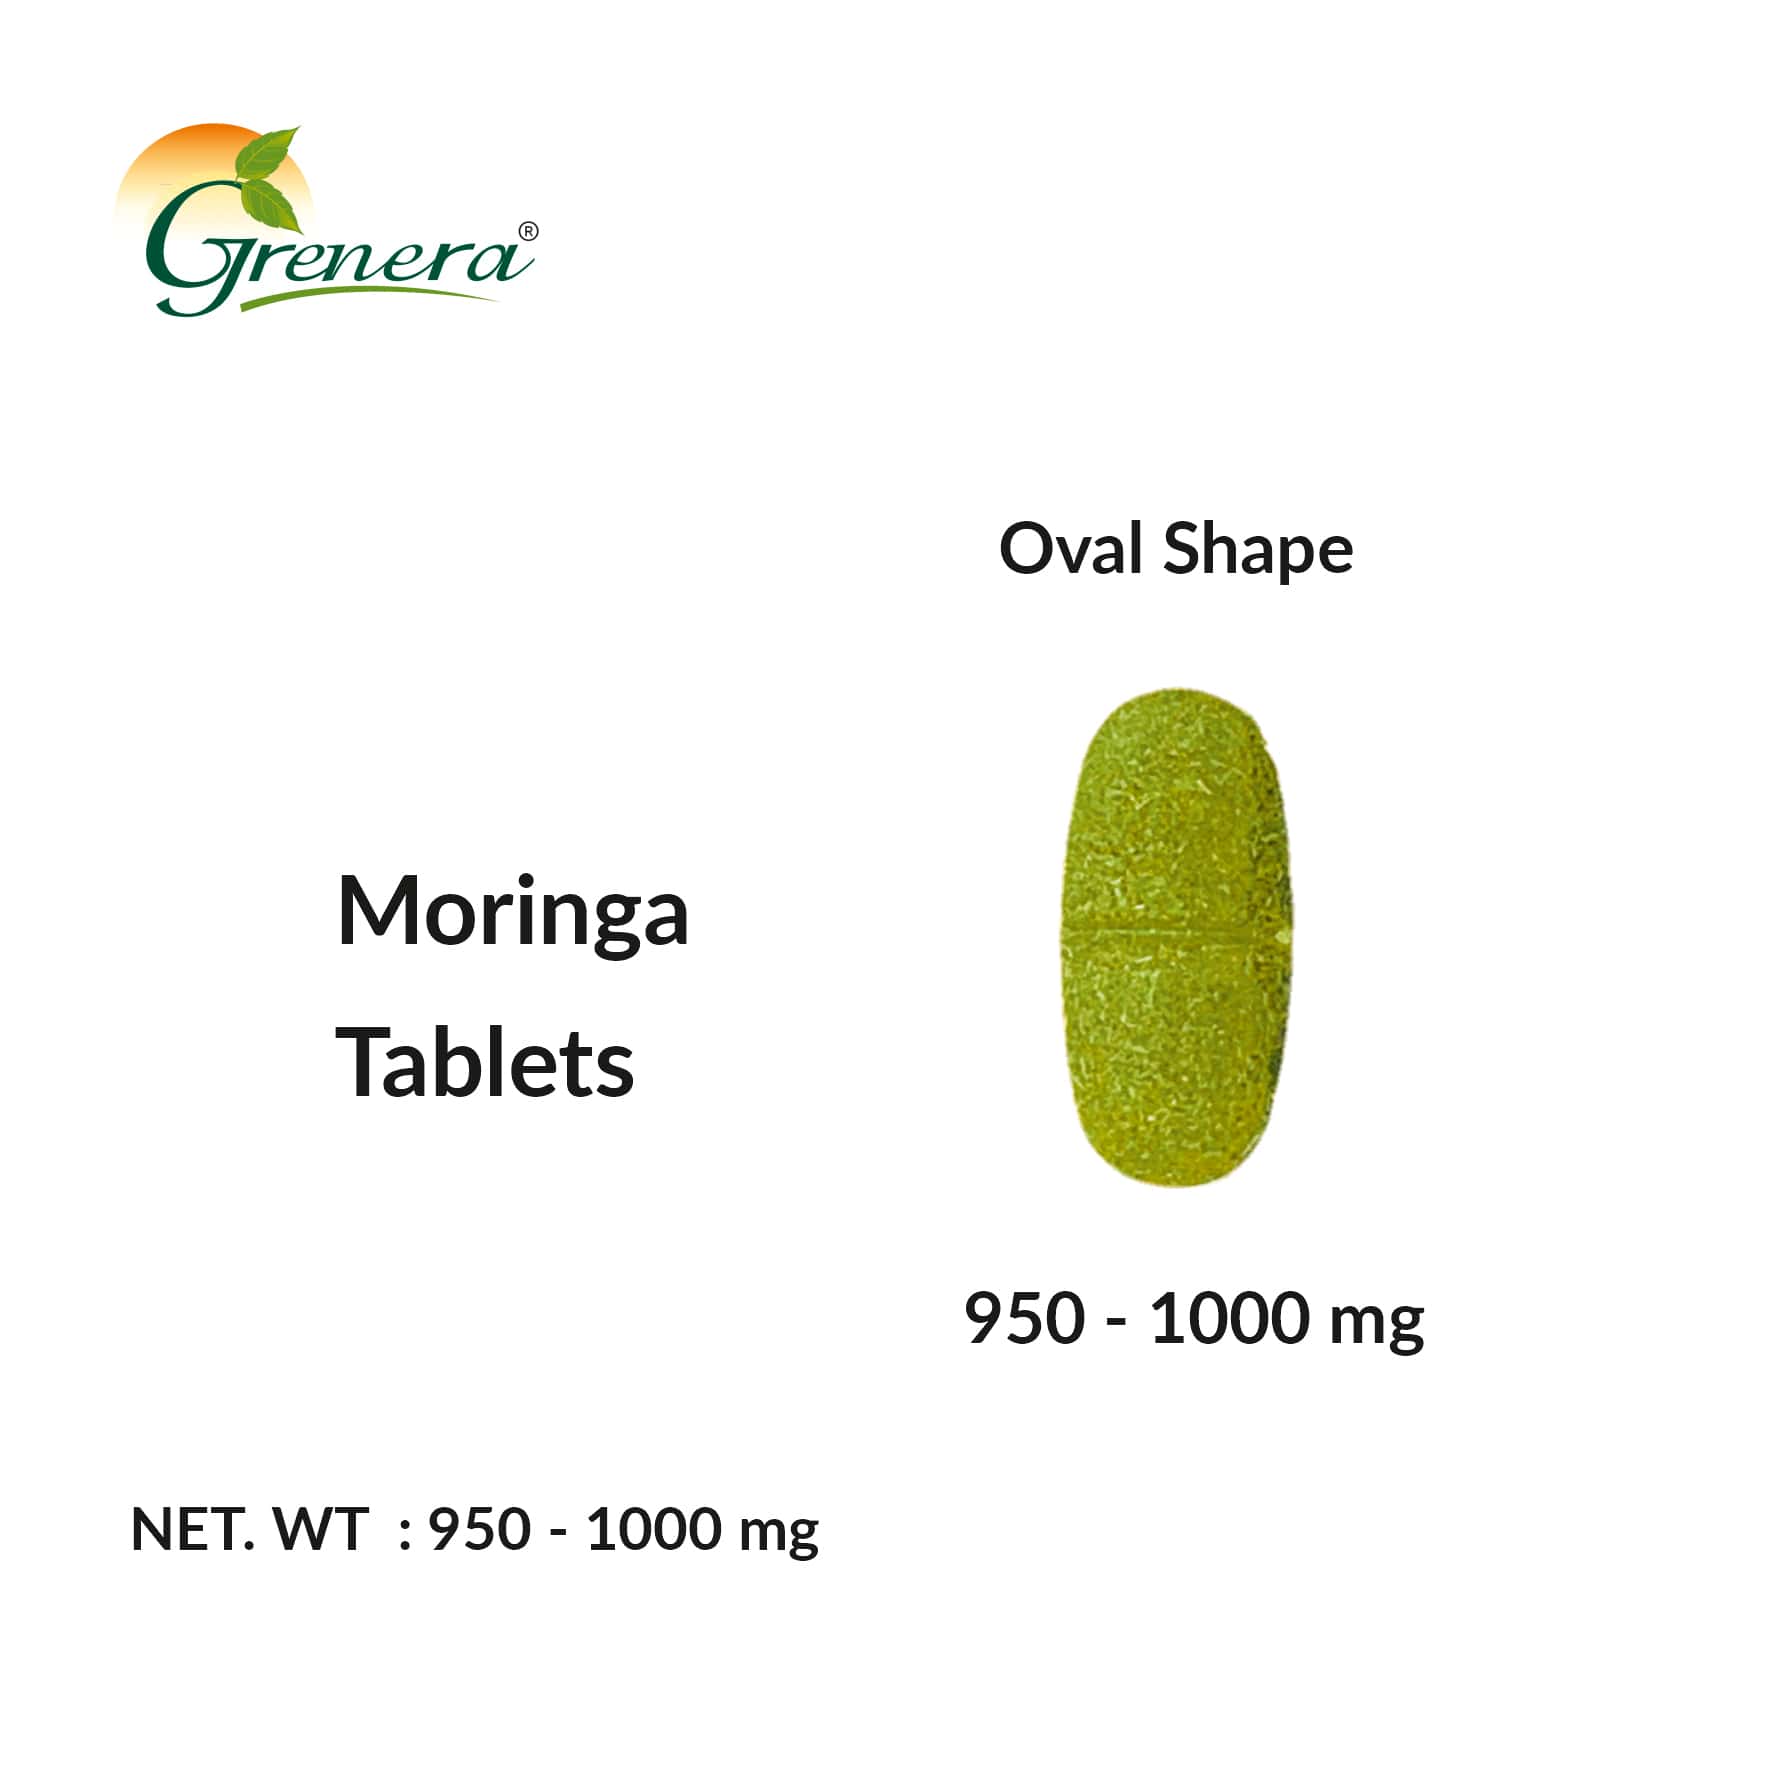 Moringa tablets shape